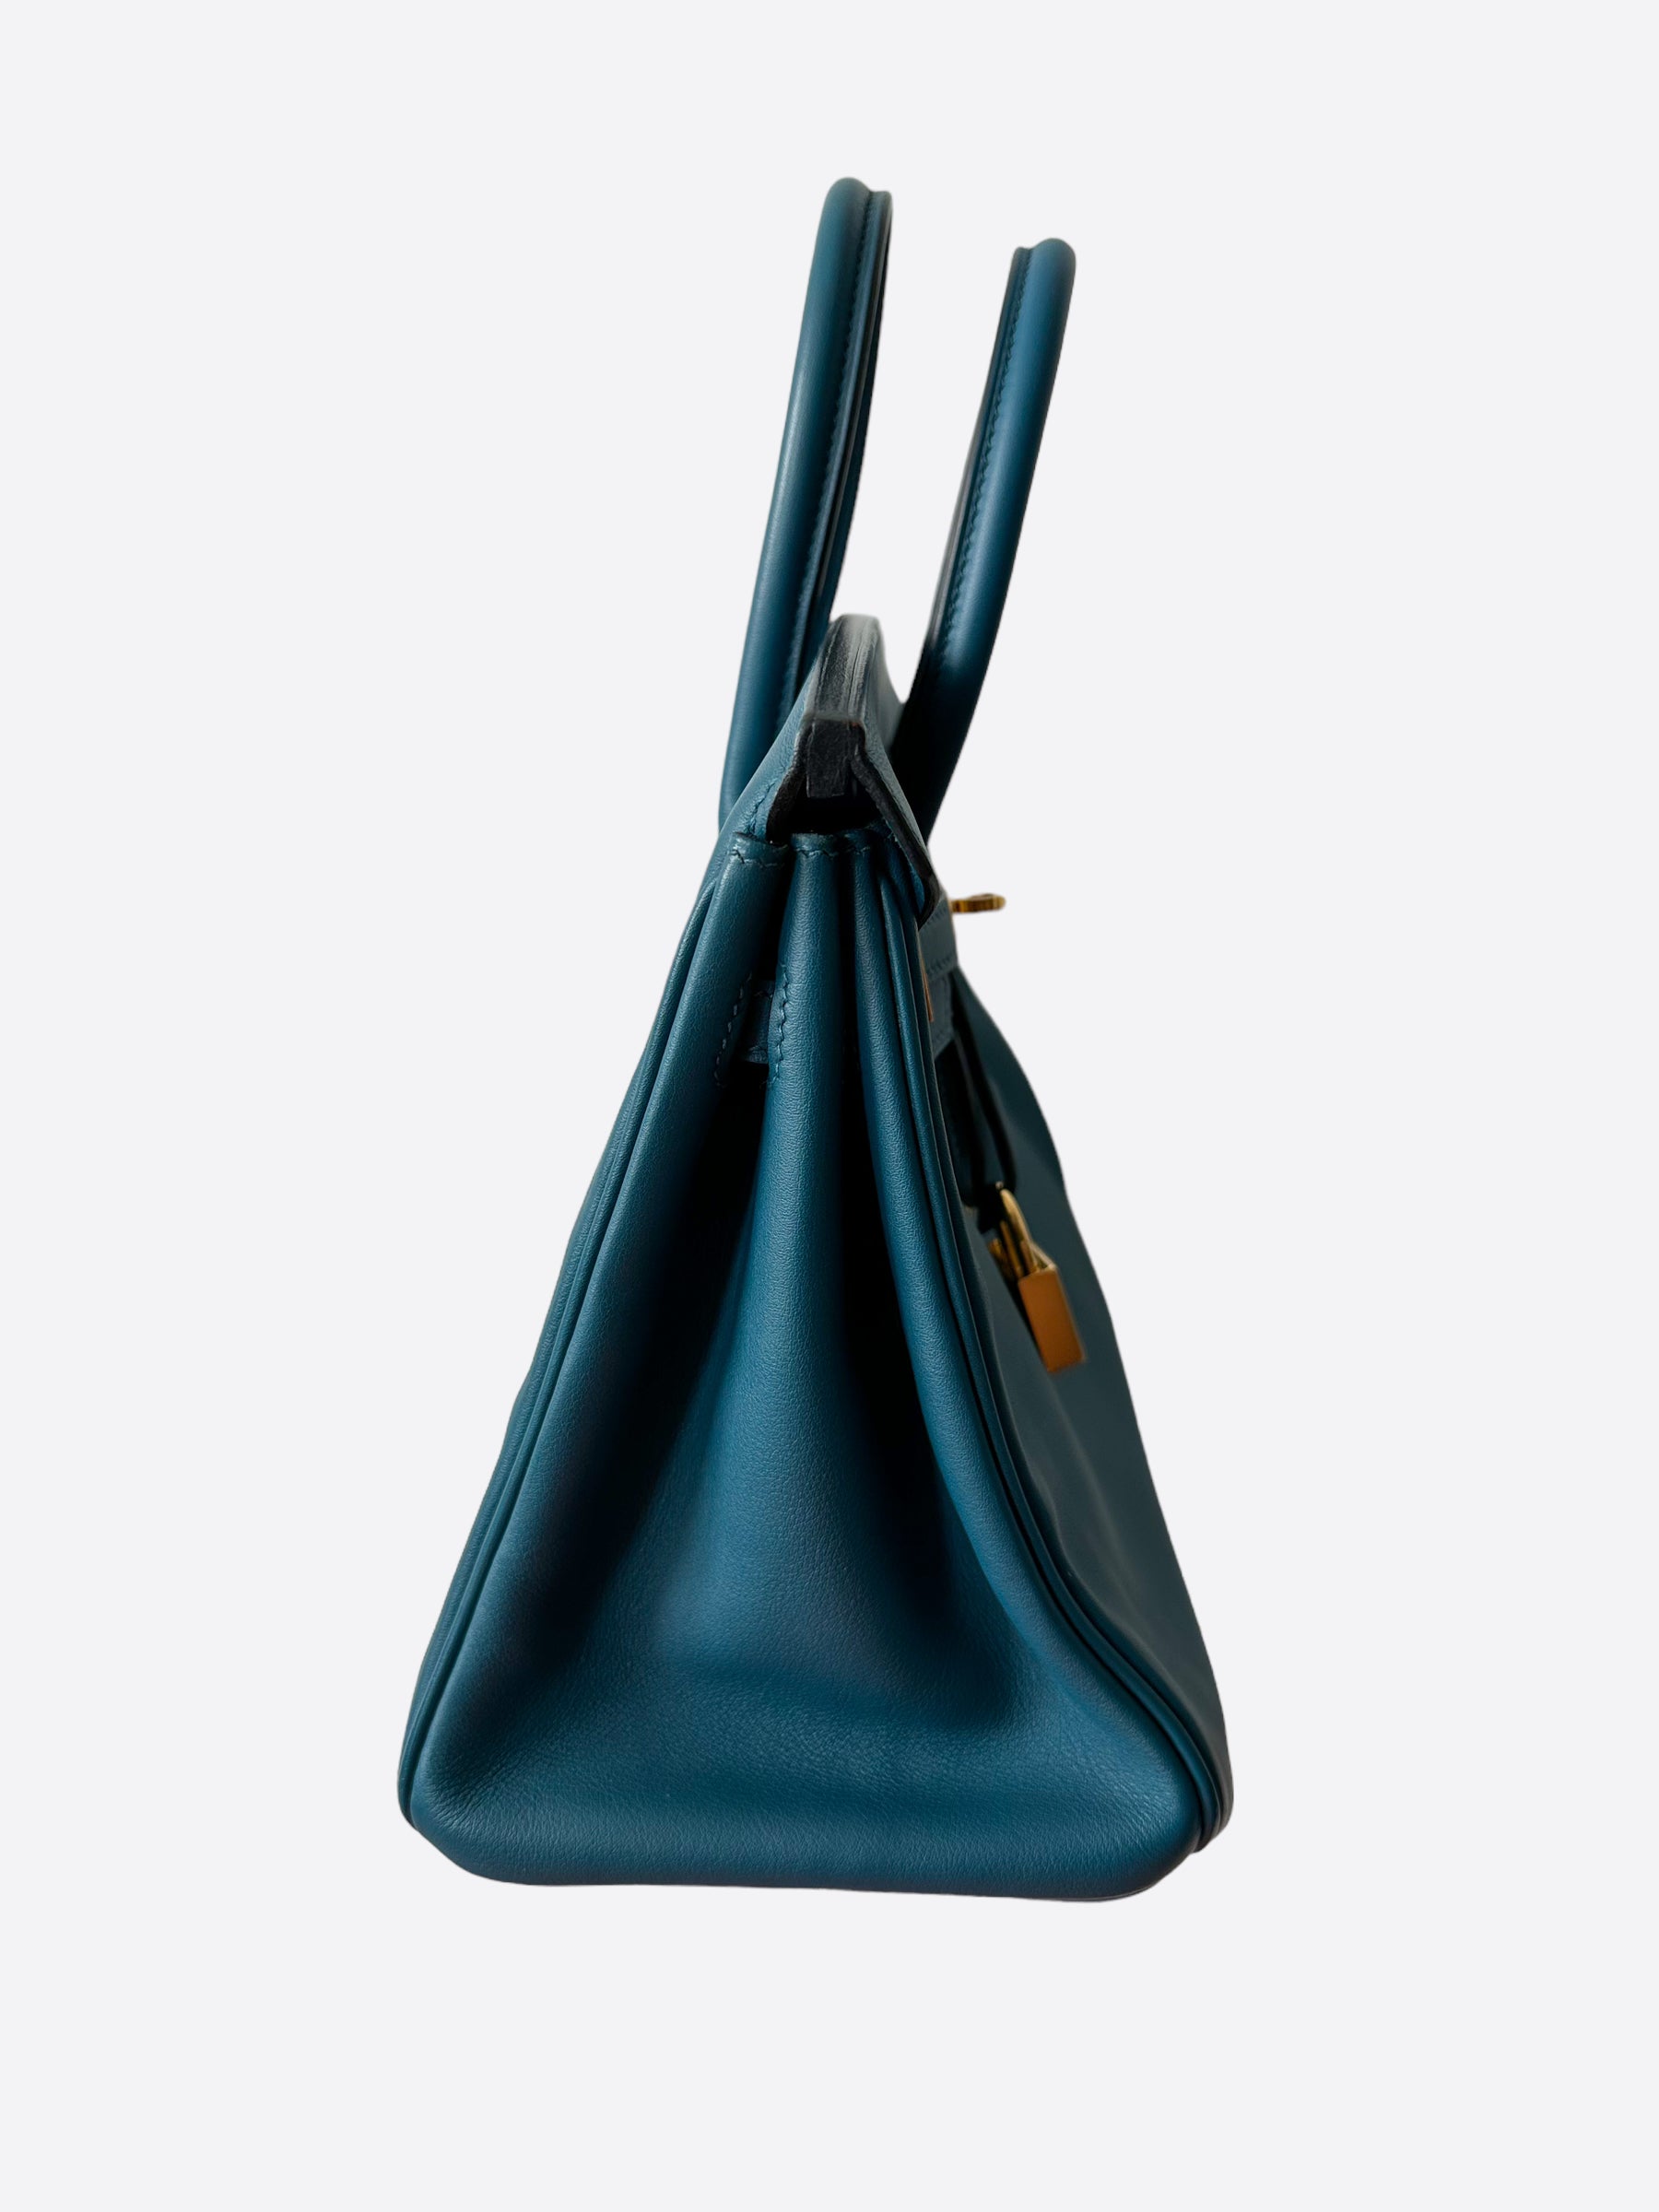 Hermès Blue Swift Birkin 25 25cm 